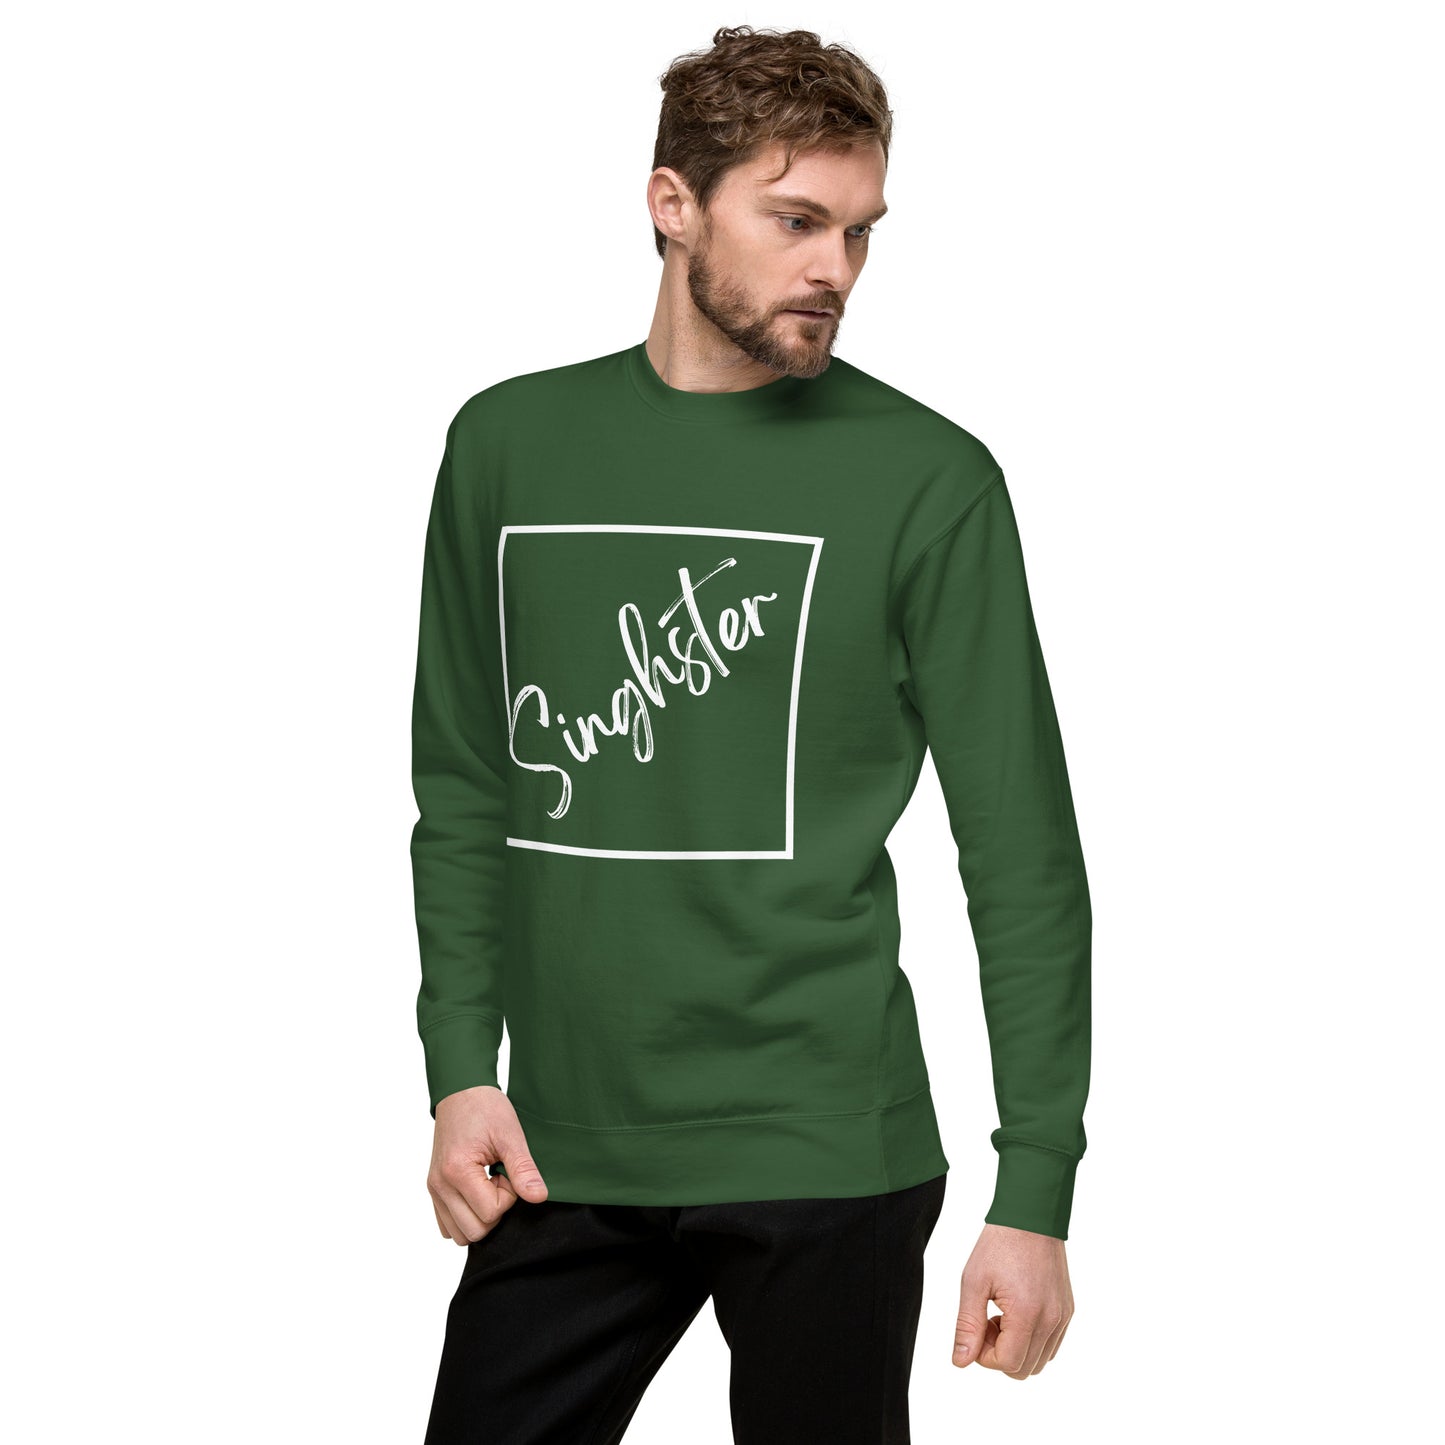 Singhster Premium Sweatshirt